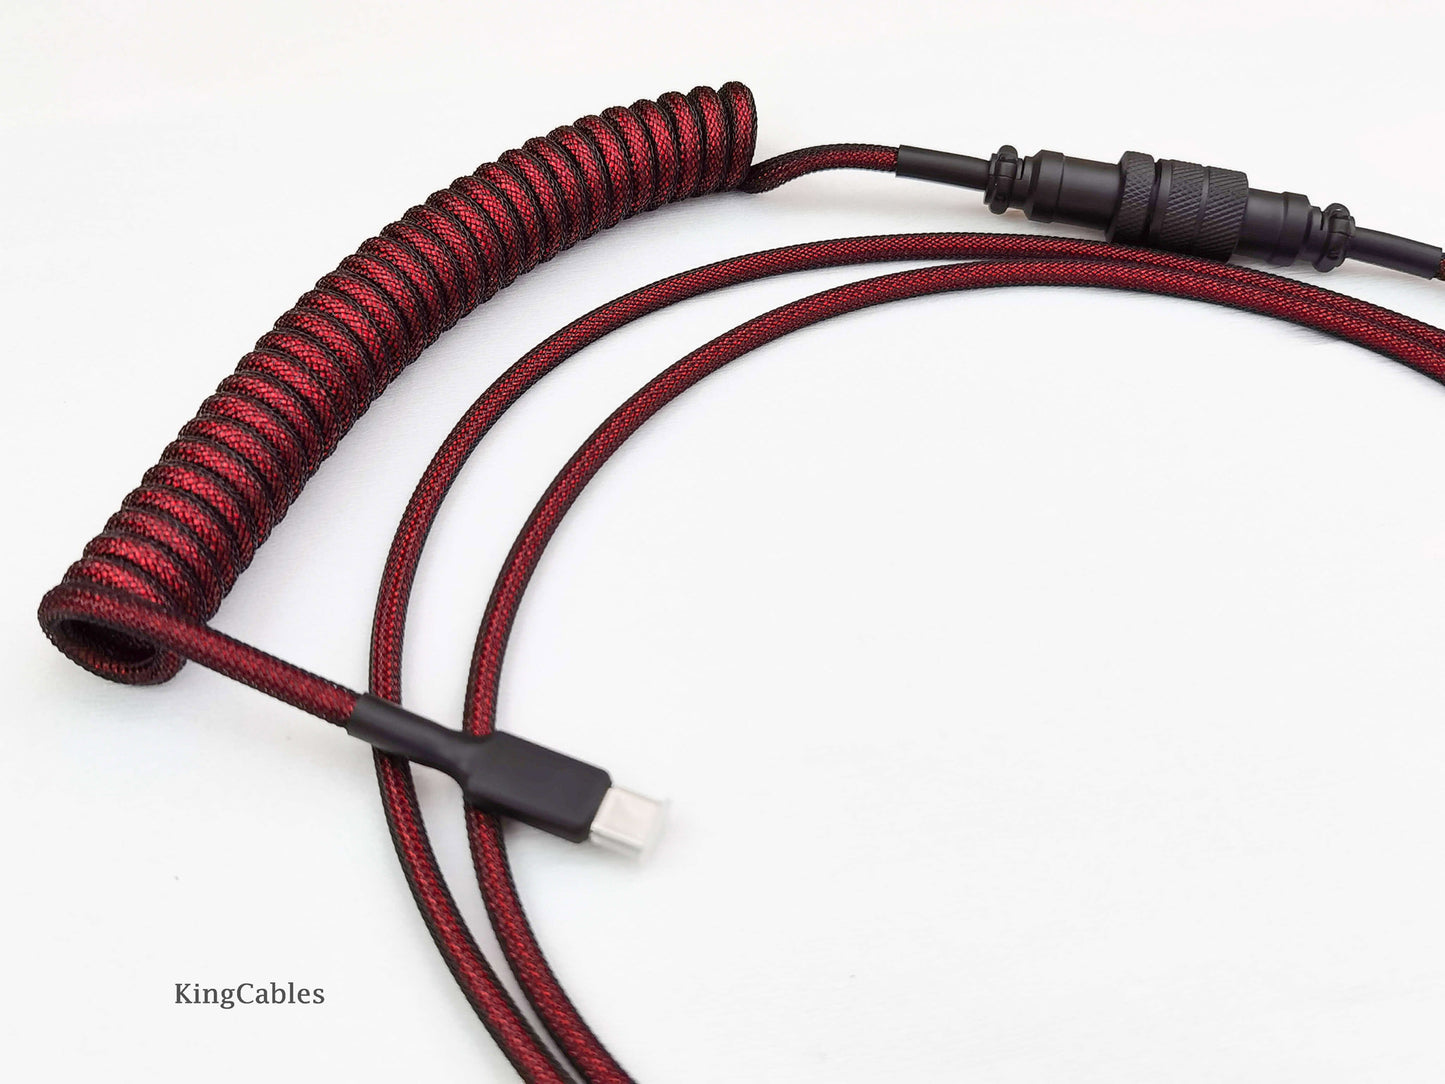 GMK Red Samurai coiled cable